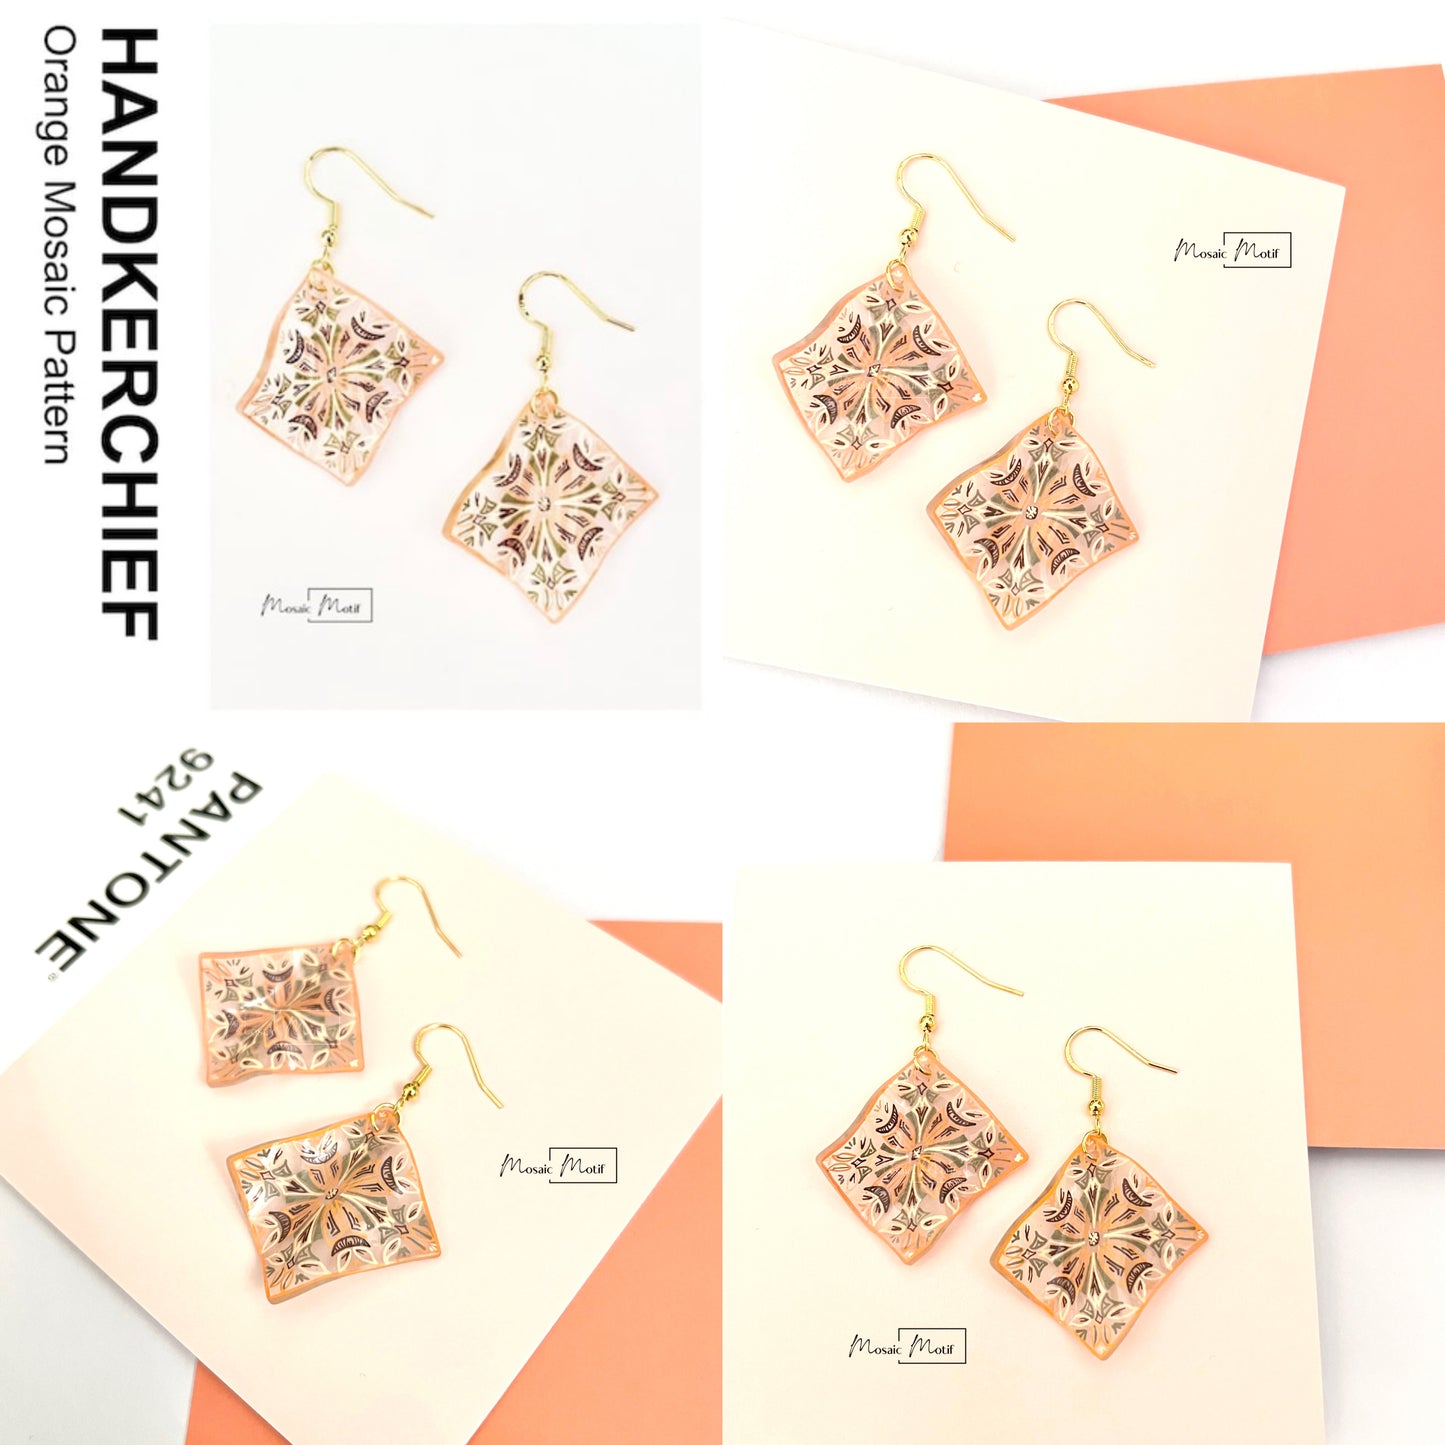 (💠Made to order) Handkerchief earrings - Geometric Vintage Vibe Pattern